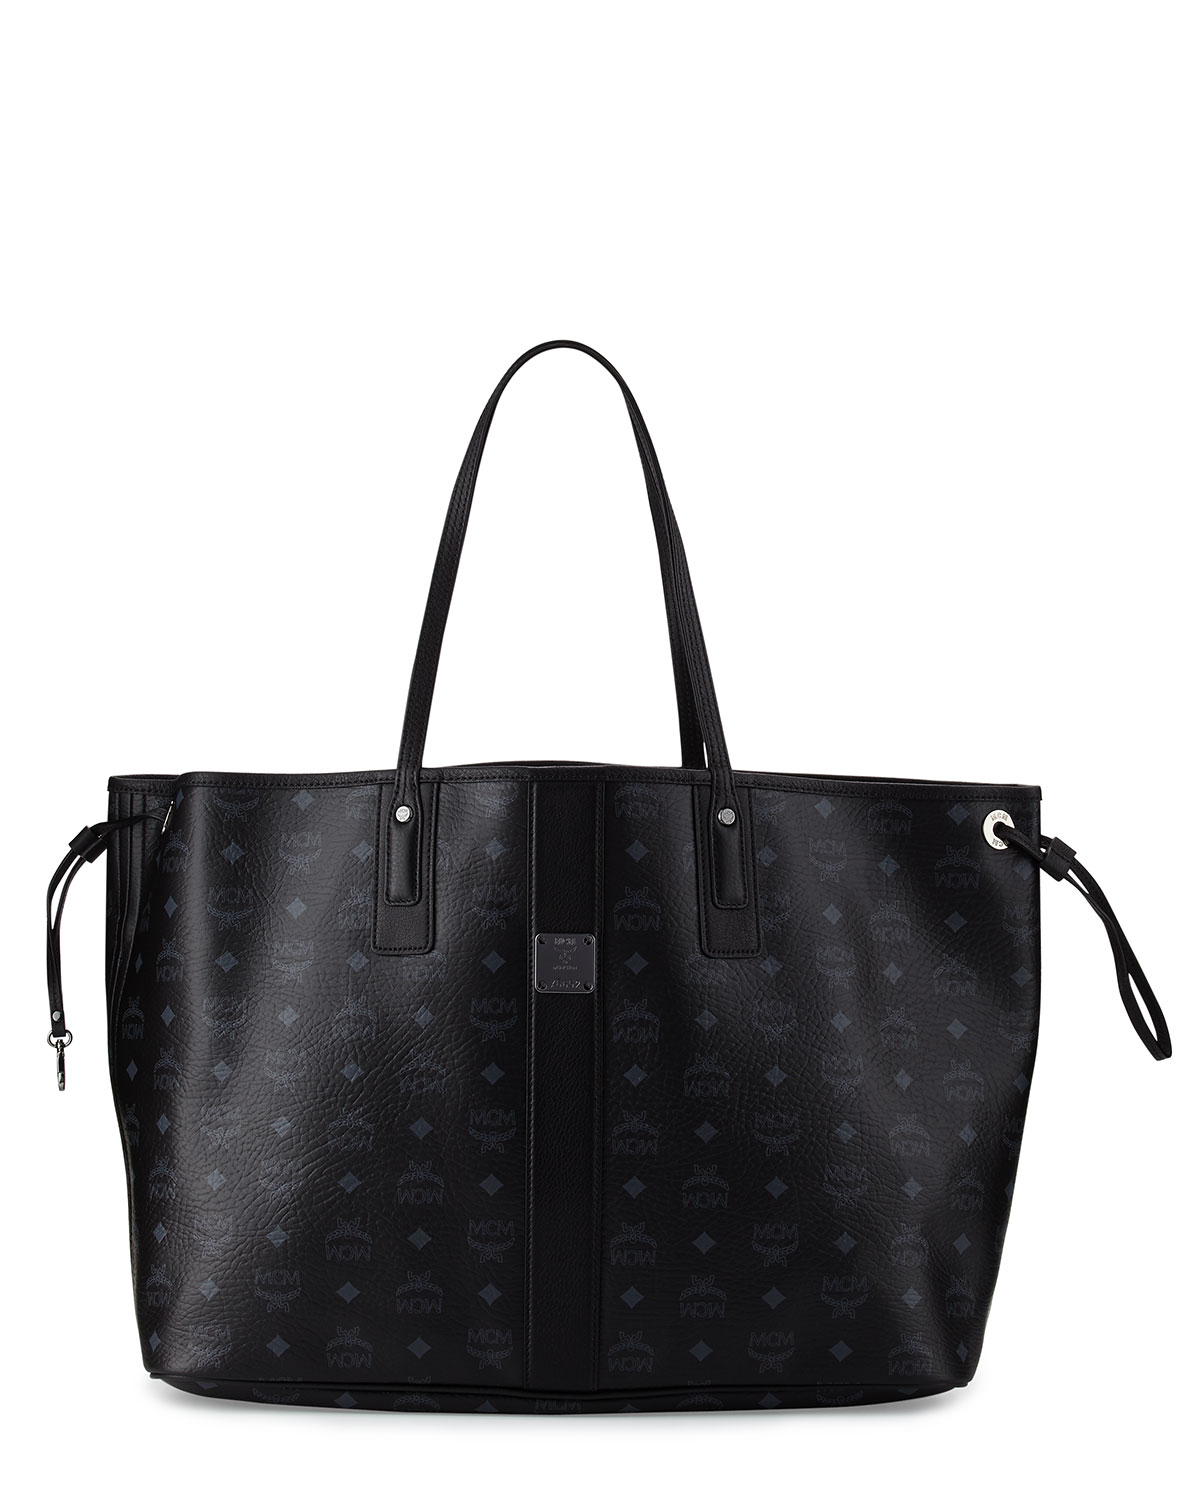 Mcm Liz Large Reversible Shopper Tote Bag in Black | Lyst